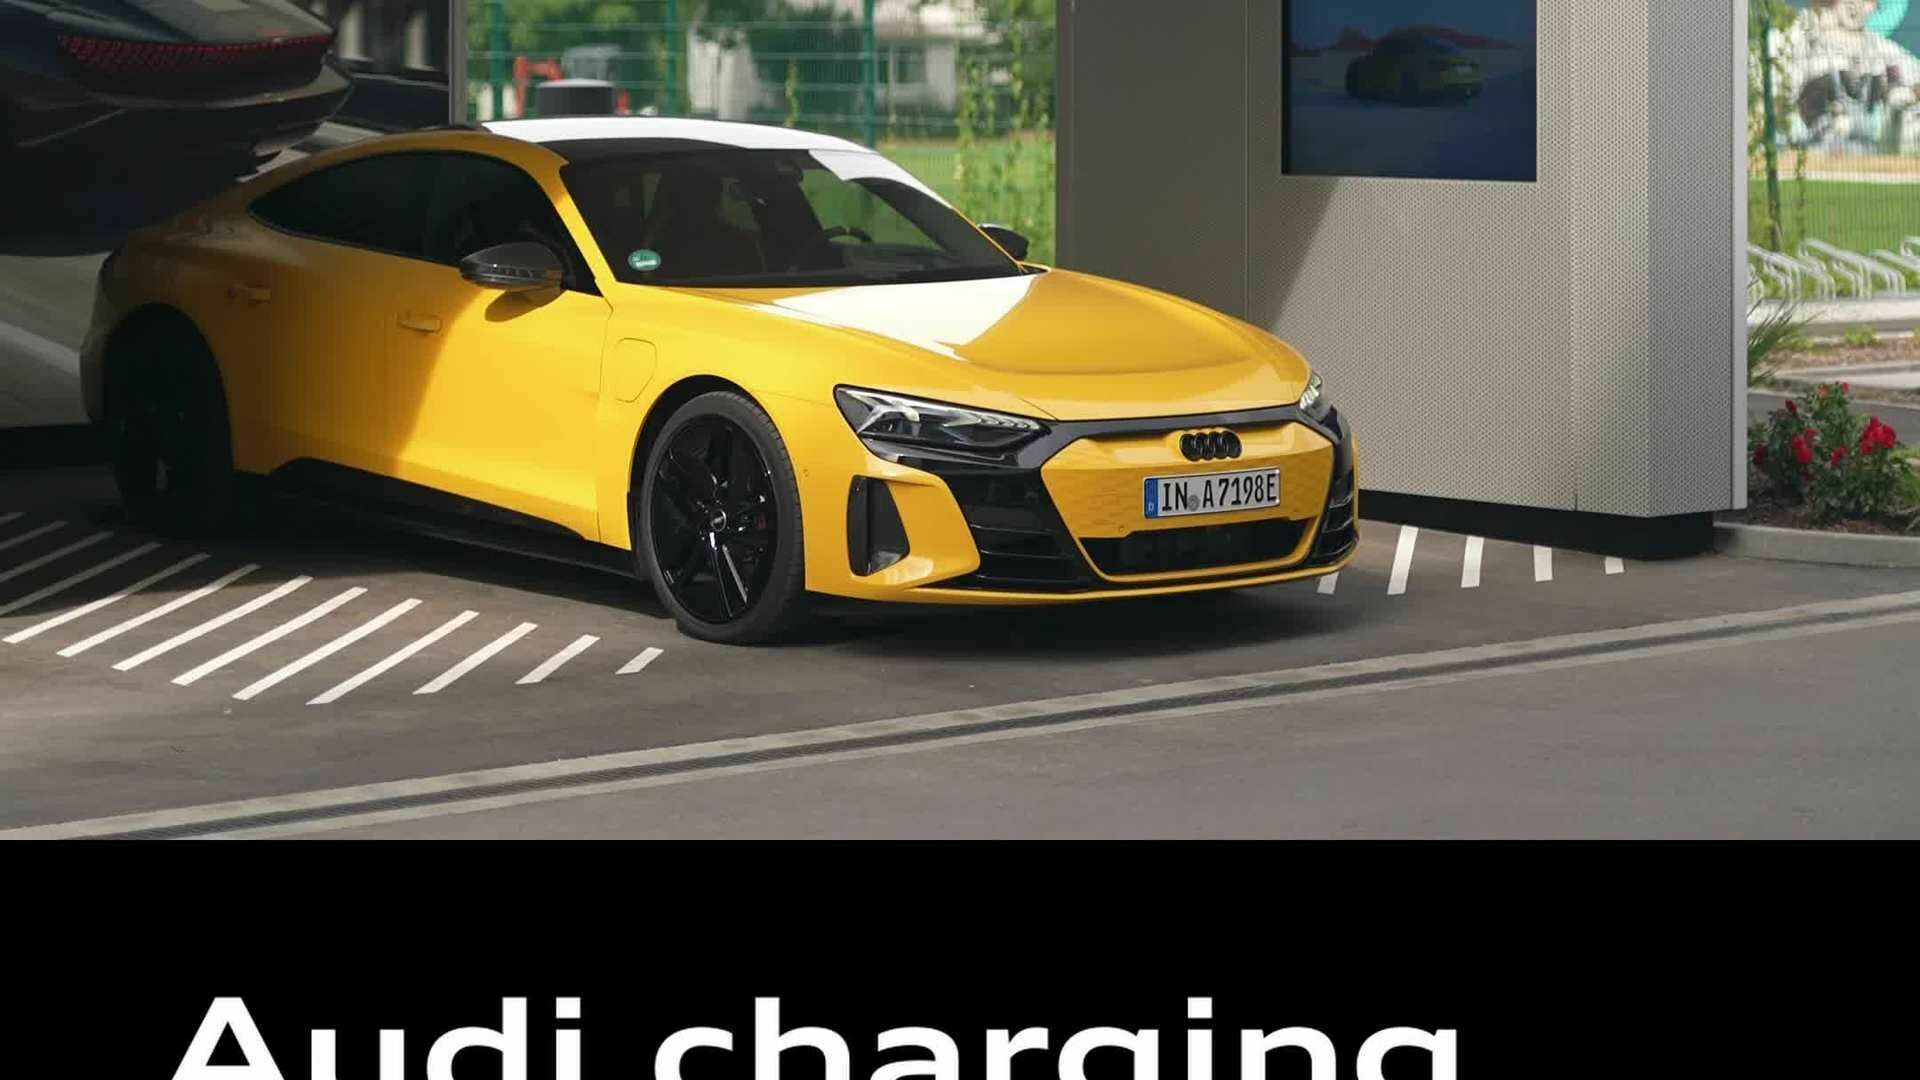 Footage: Audi charging hub Munich (vertical)